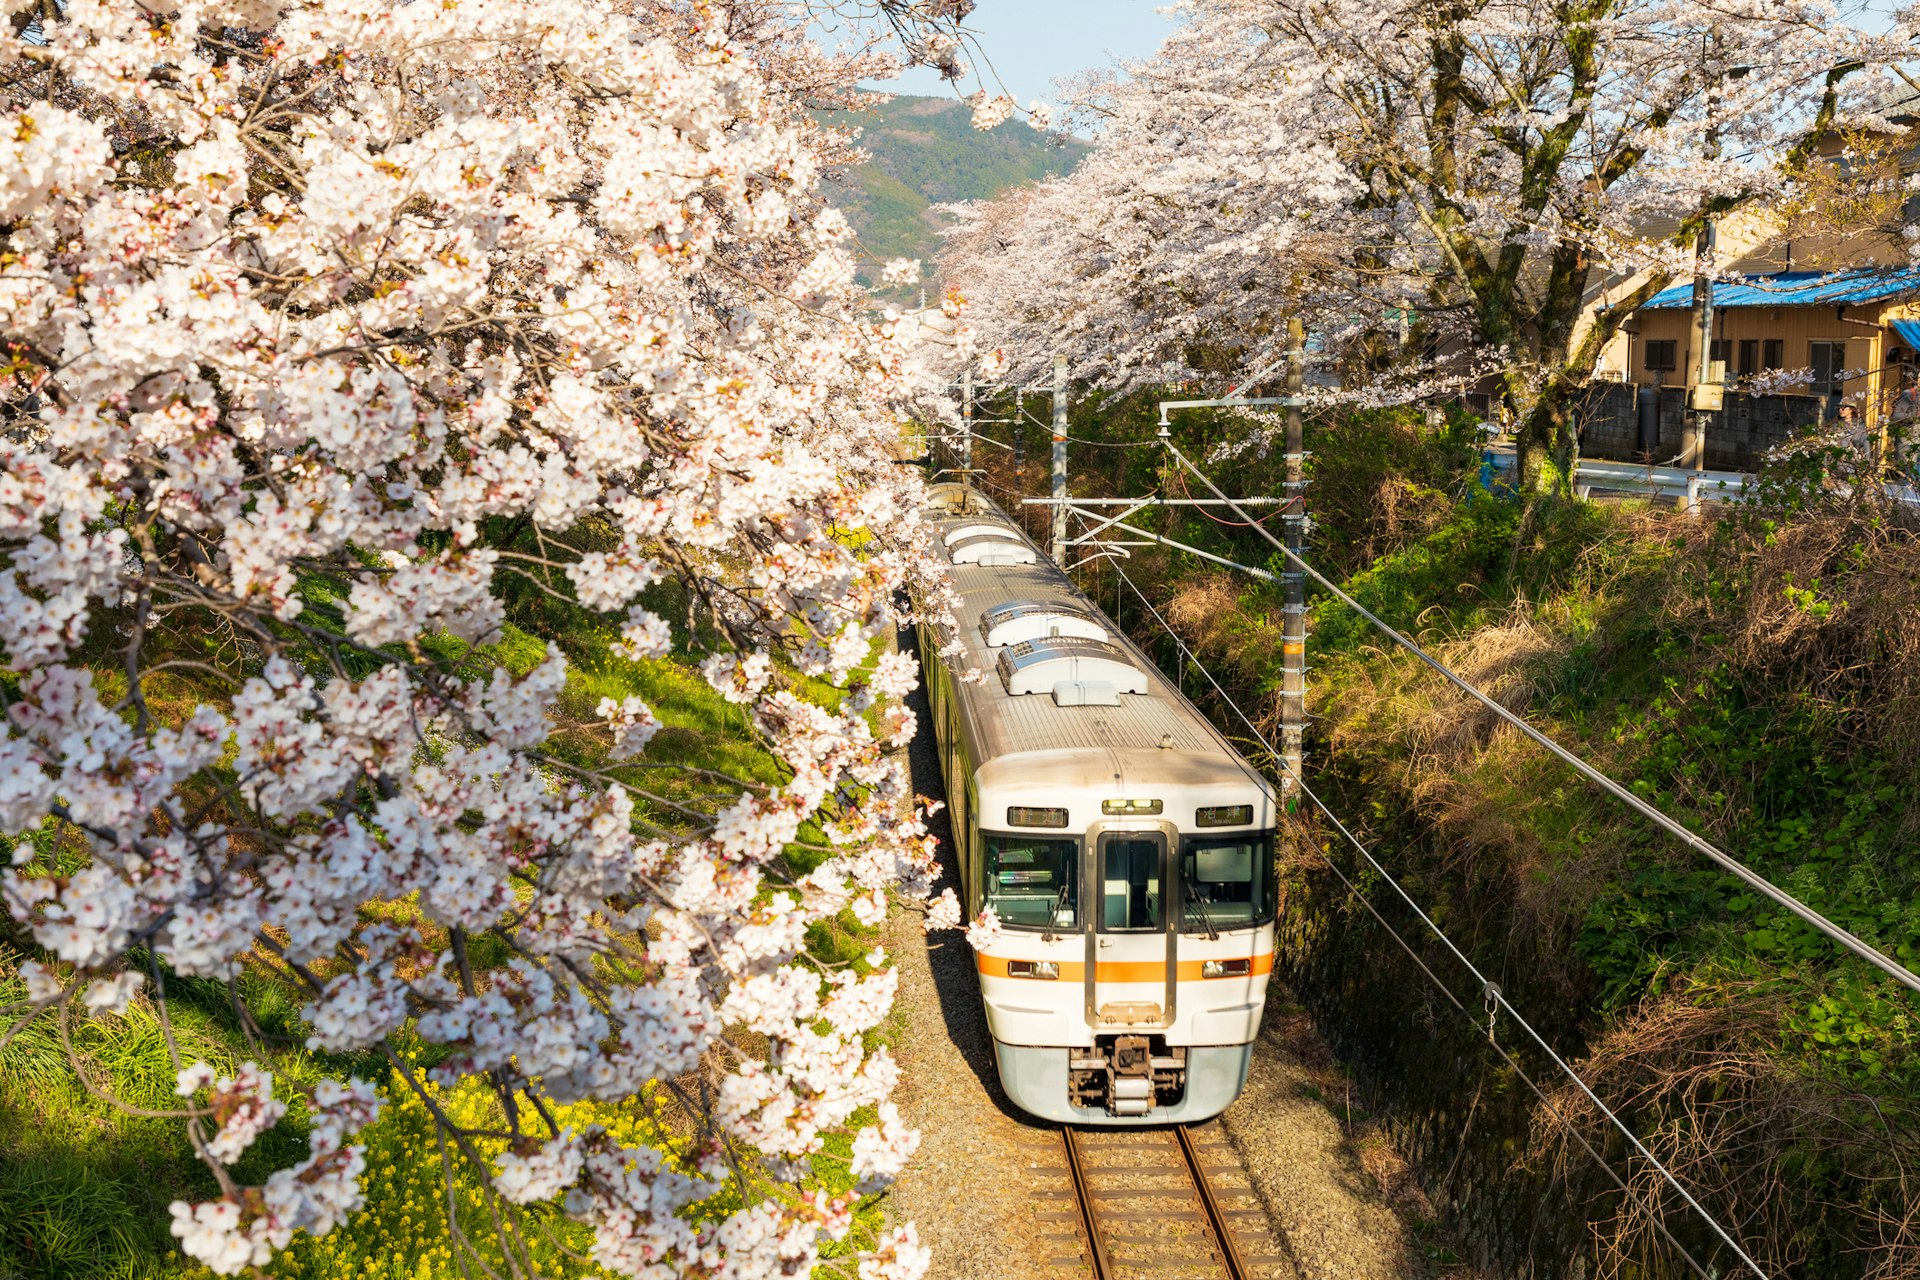 A train in Japan runs under cherry blossoms